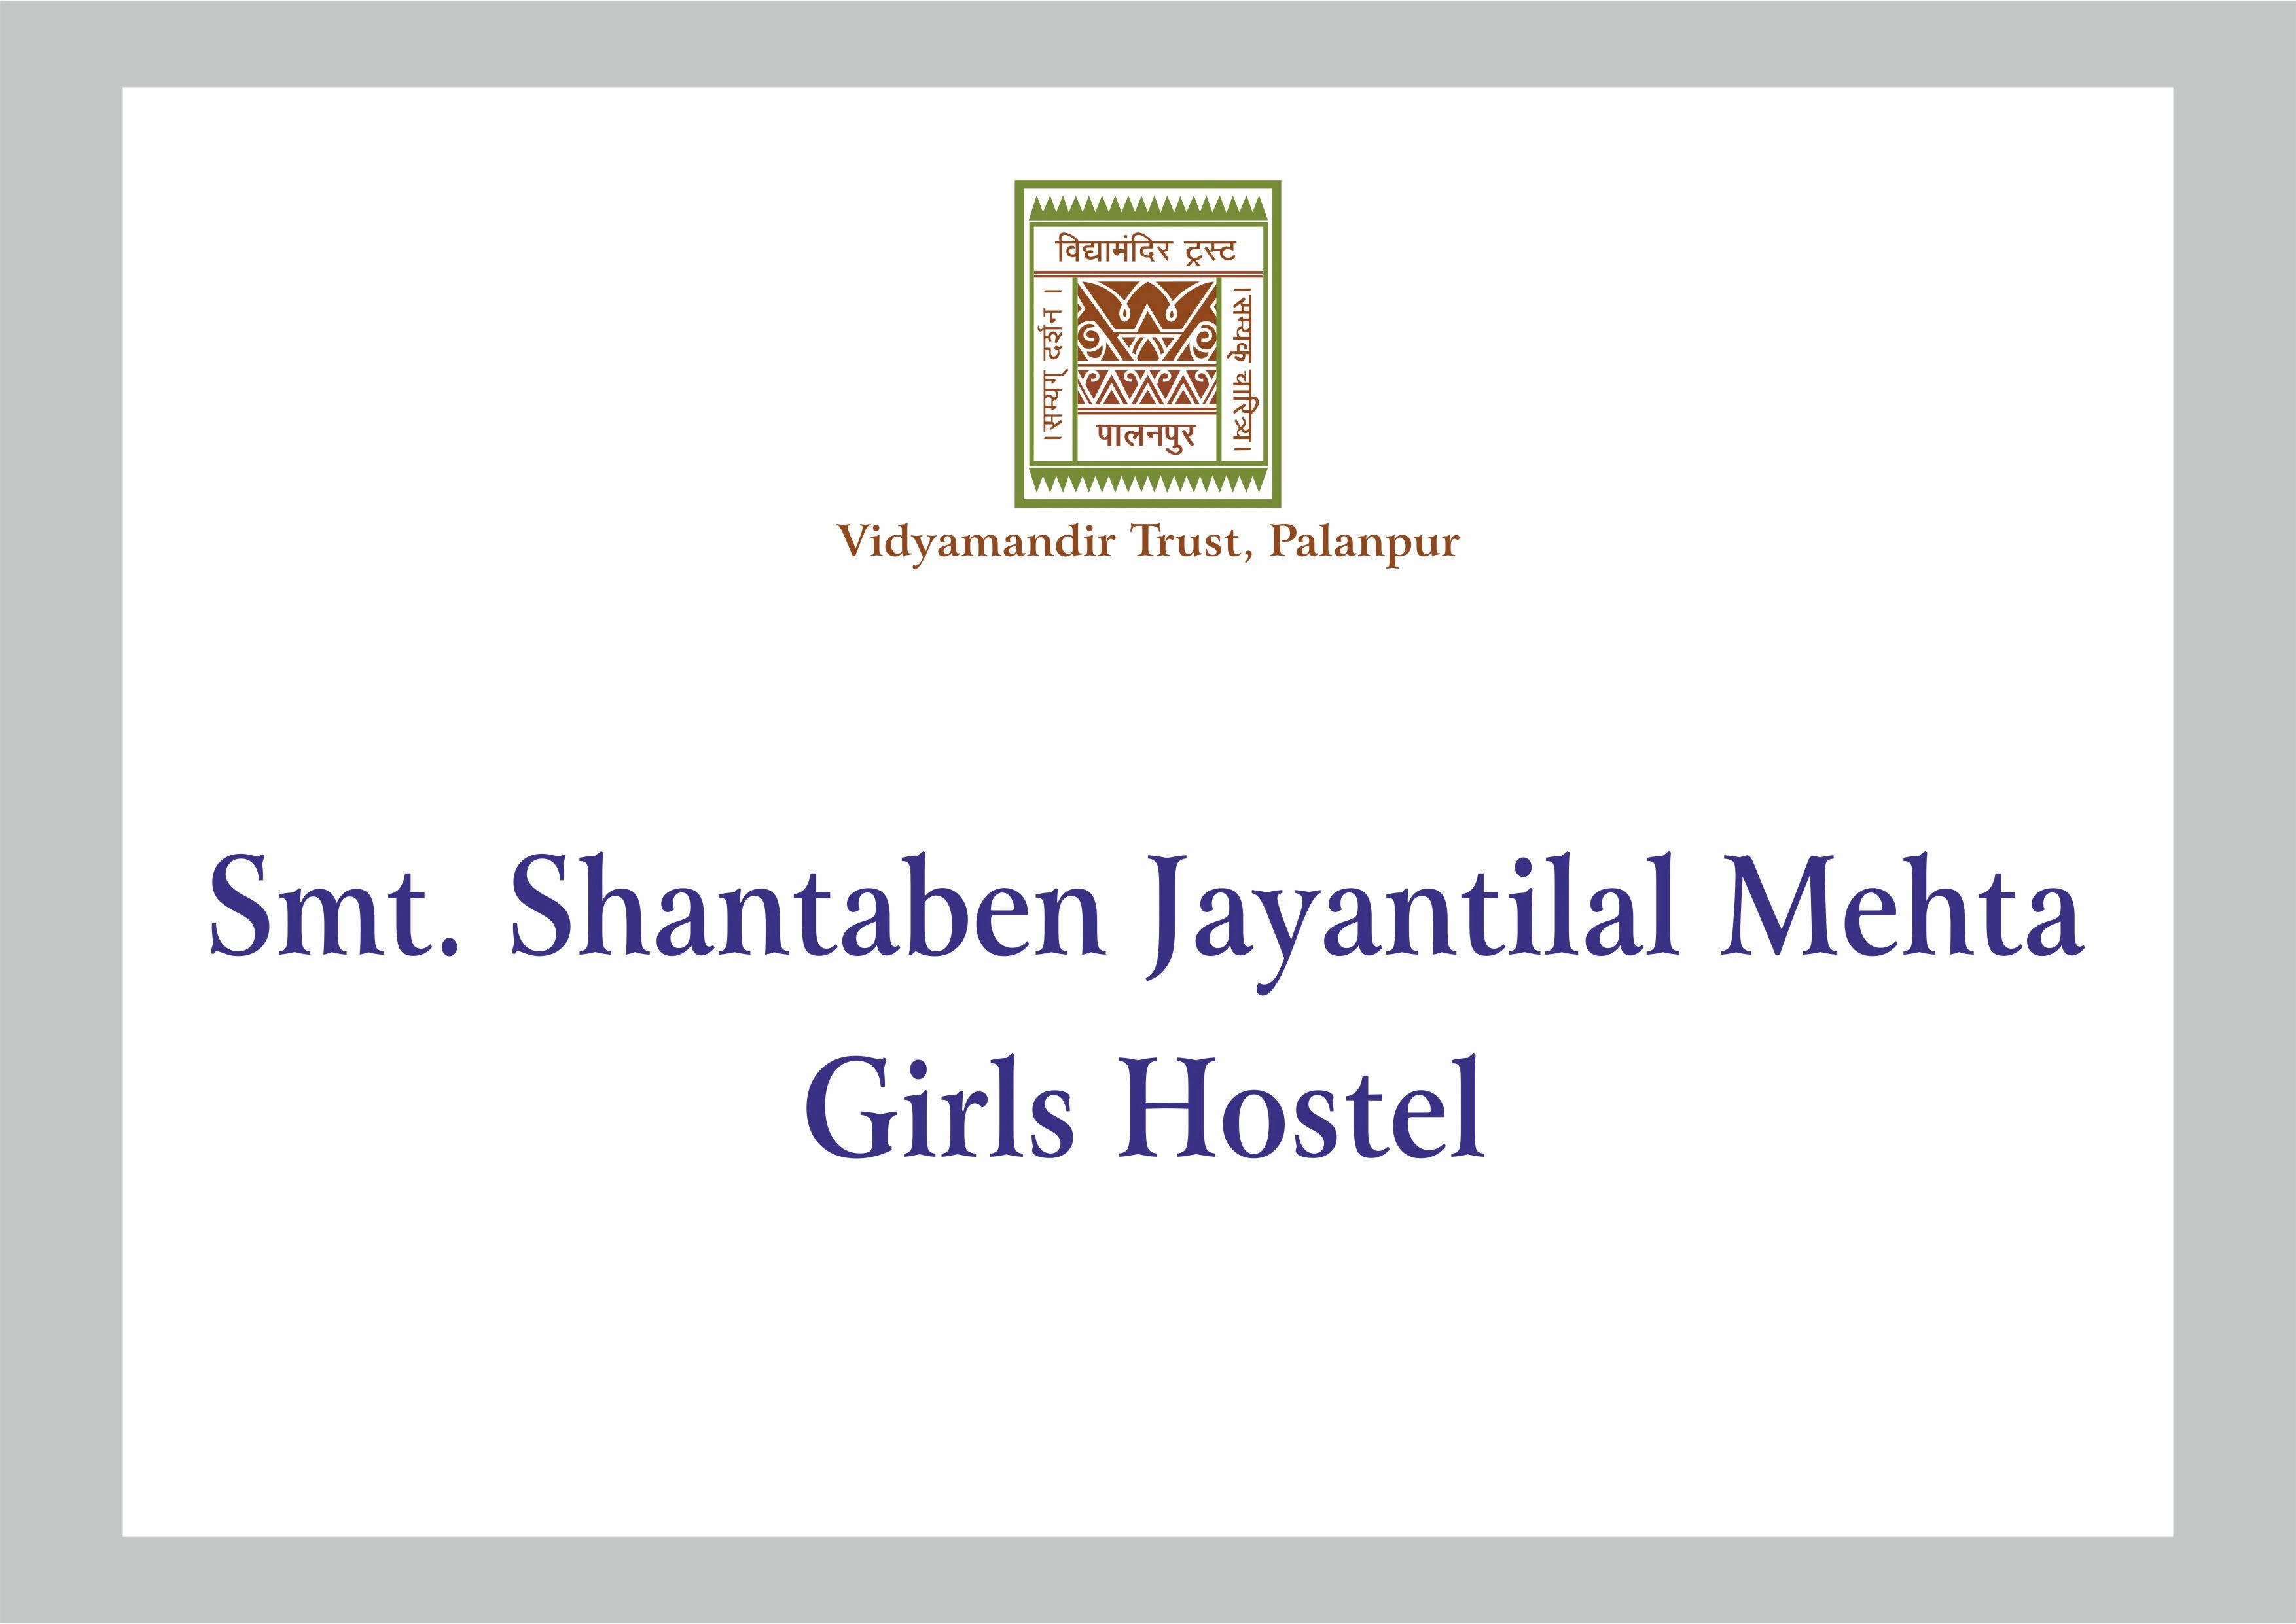 Smt. Shantaben Jayantilal Mehta Girls Hostel - Building Photo